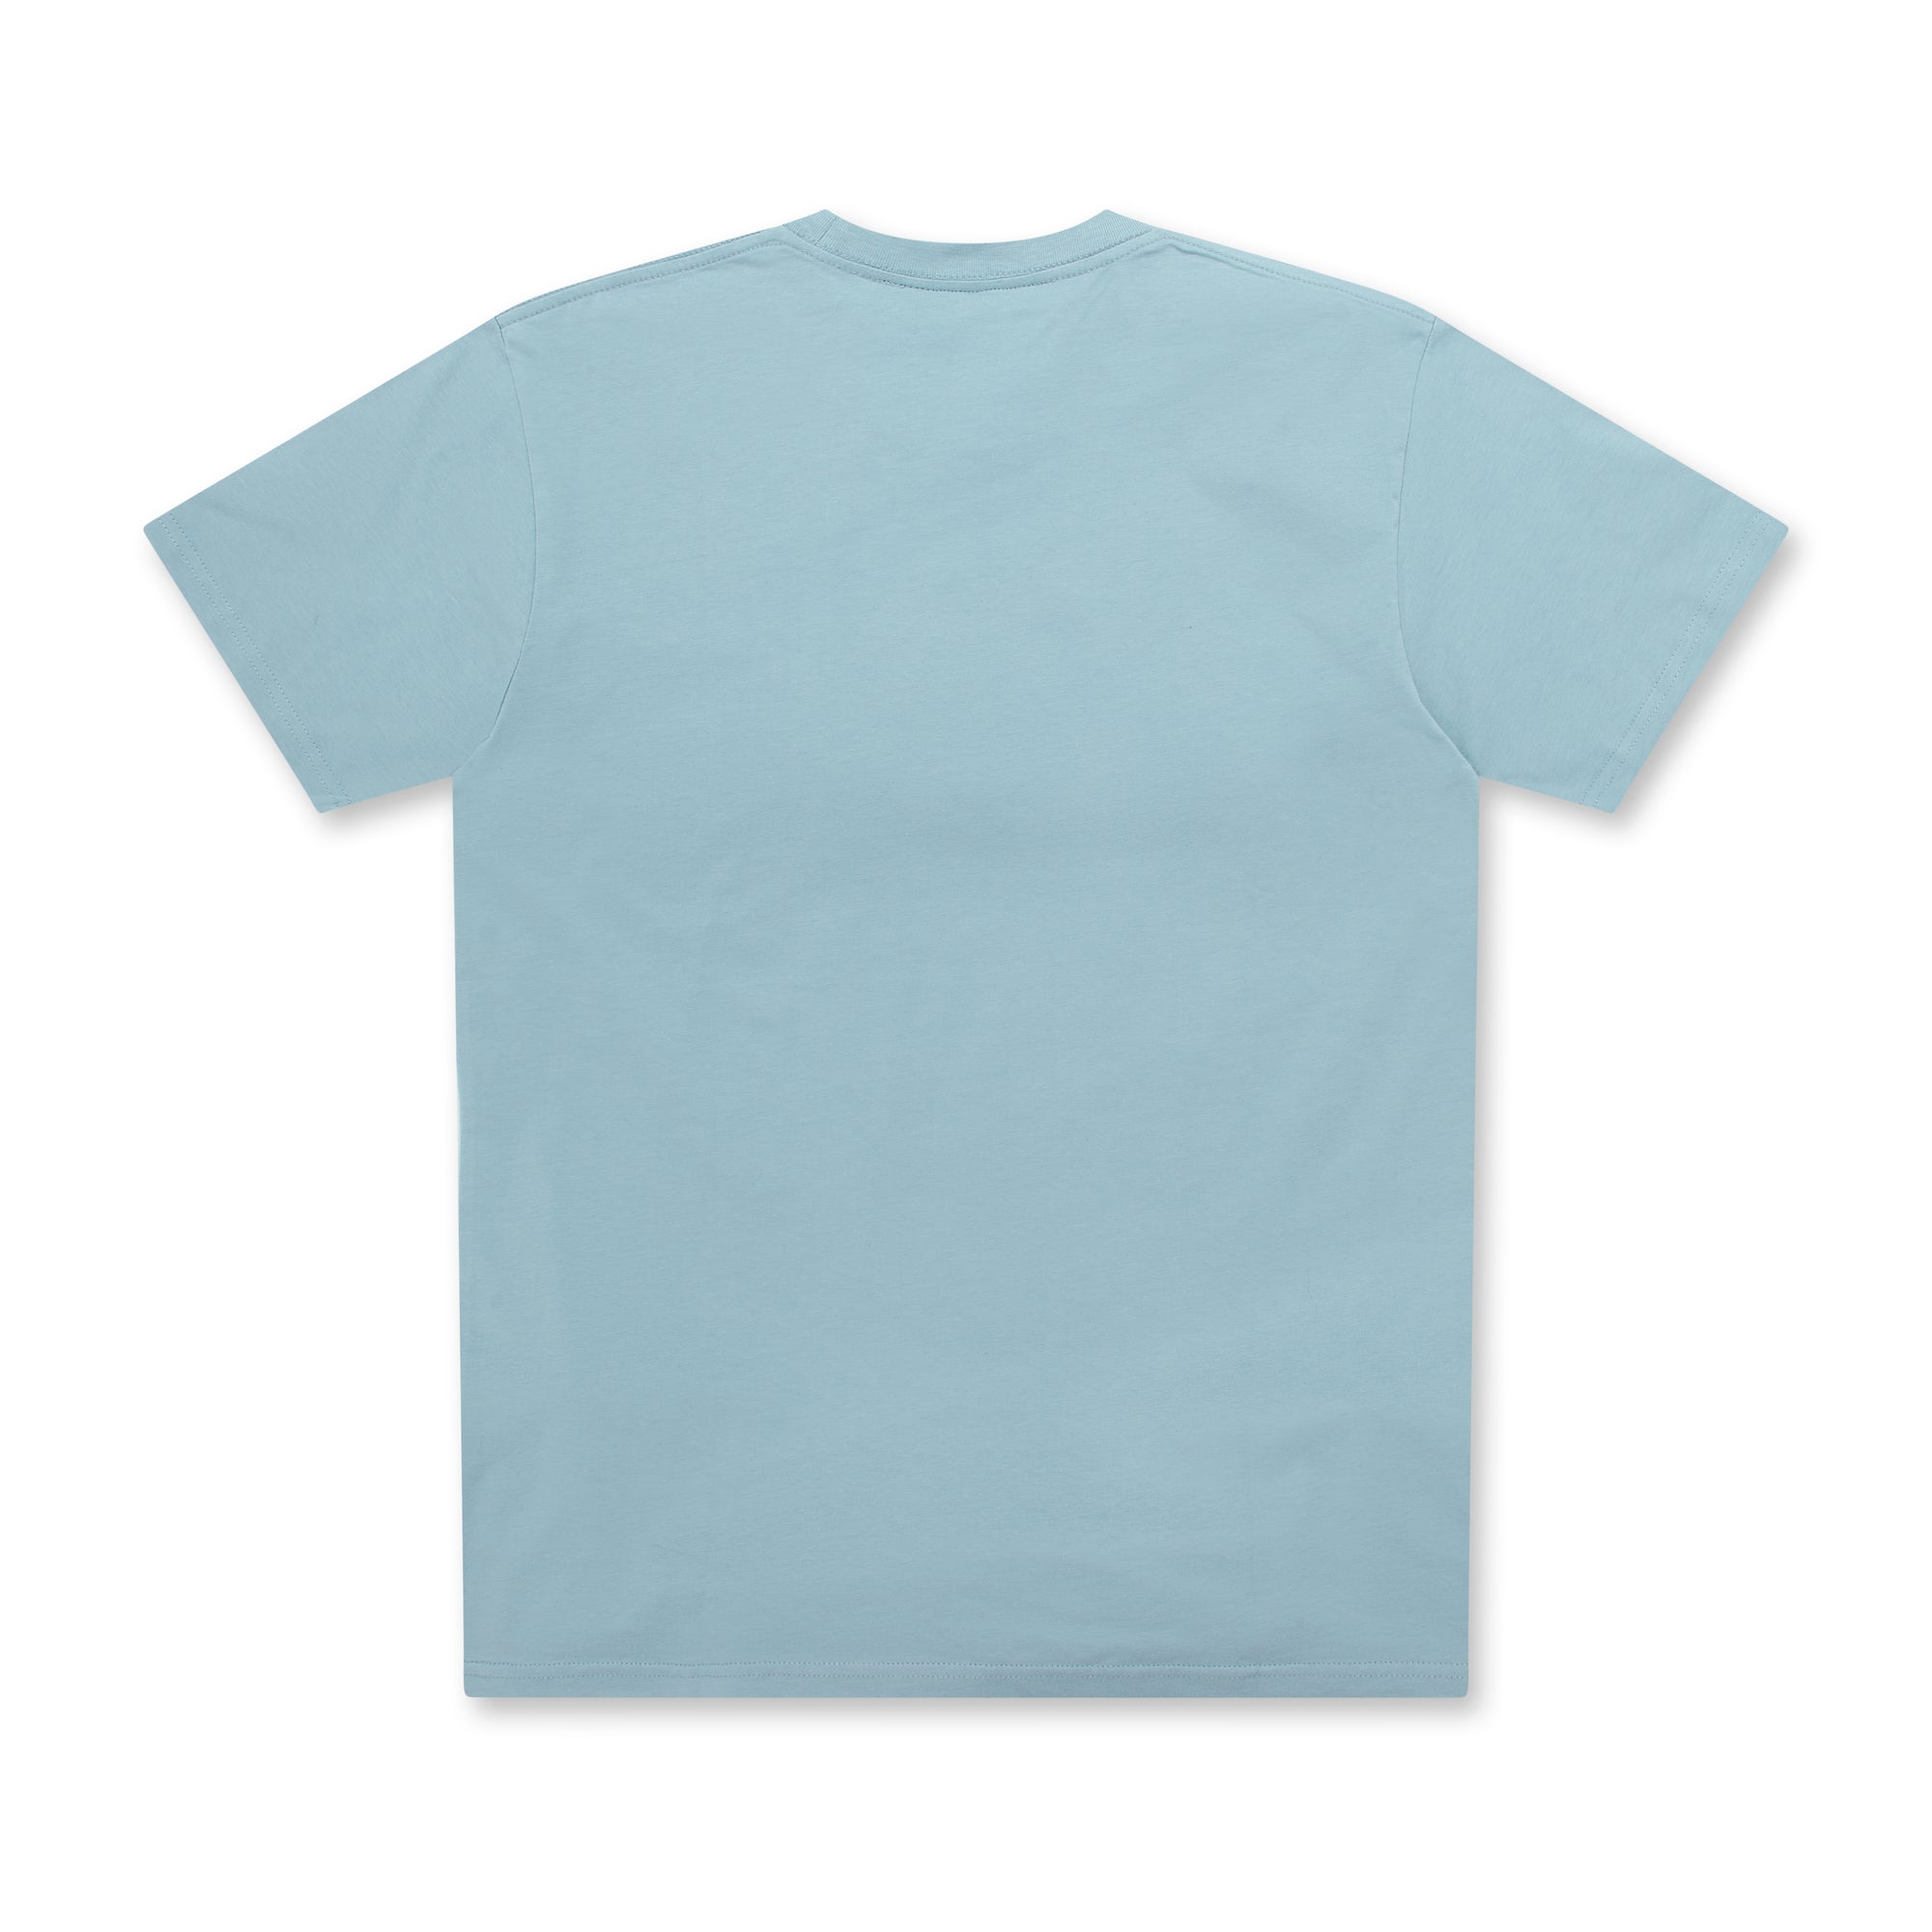 Lifeisunfair - Unrequited T-Shirt - (Dusty Blue) view 2